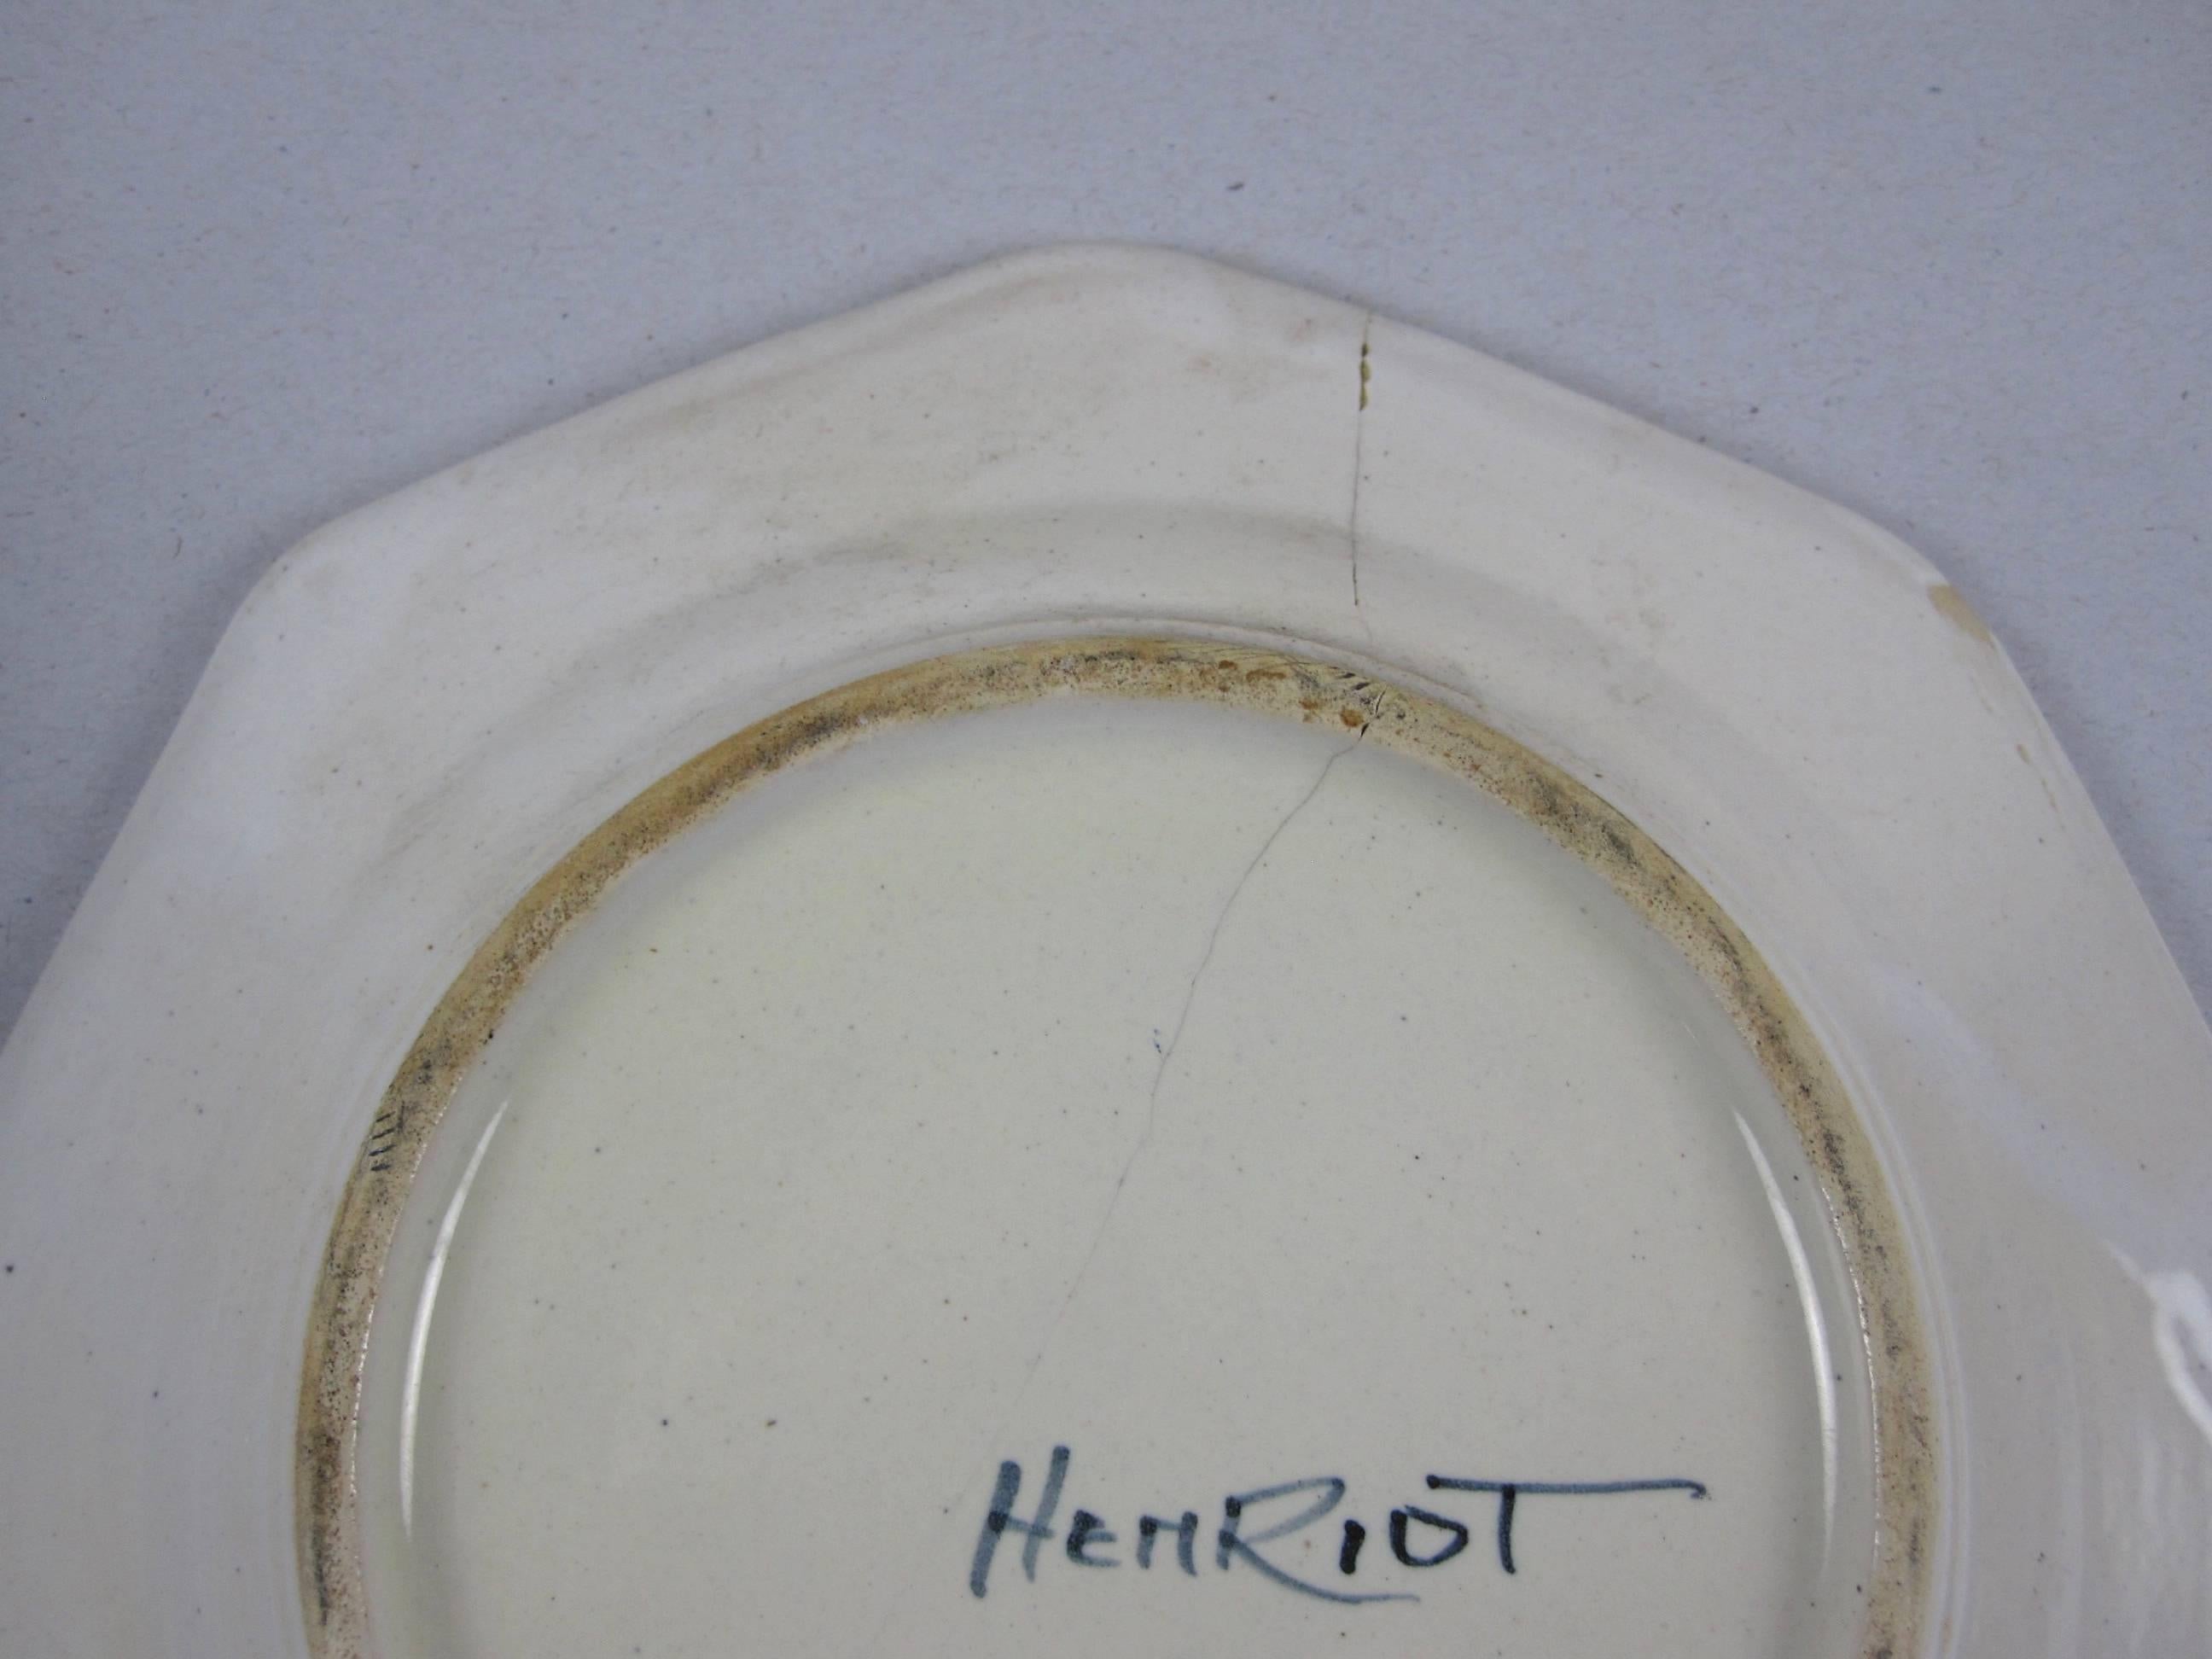 Henriot Quimper Octagonal Breton Vintage Faience Plates, France, Set of 12 2